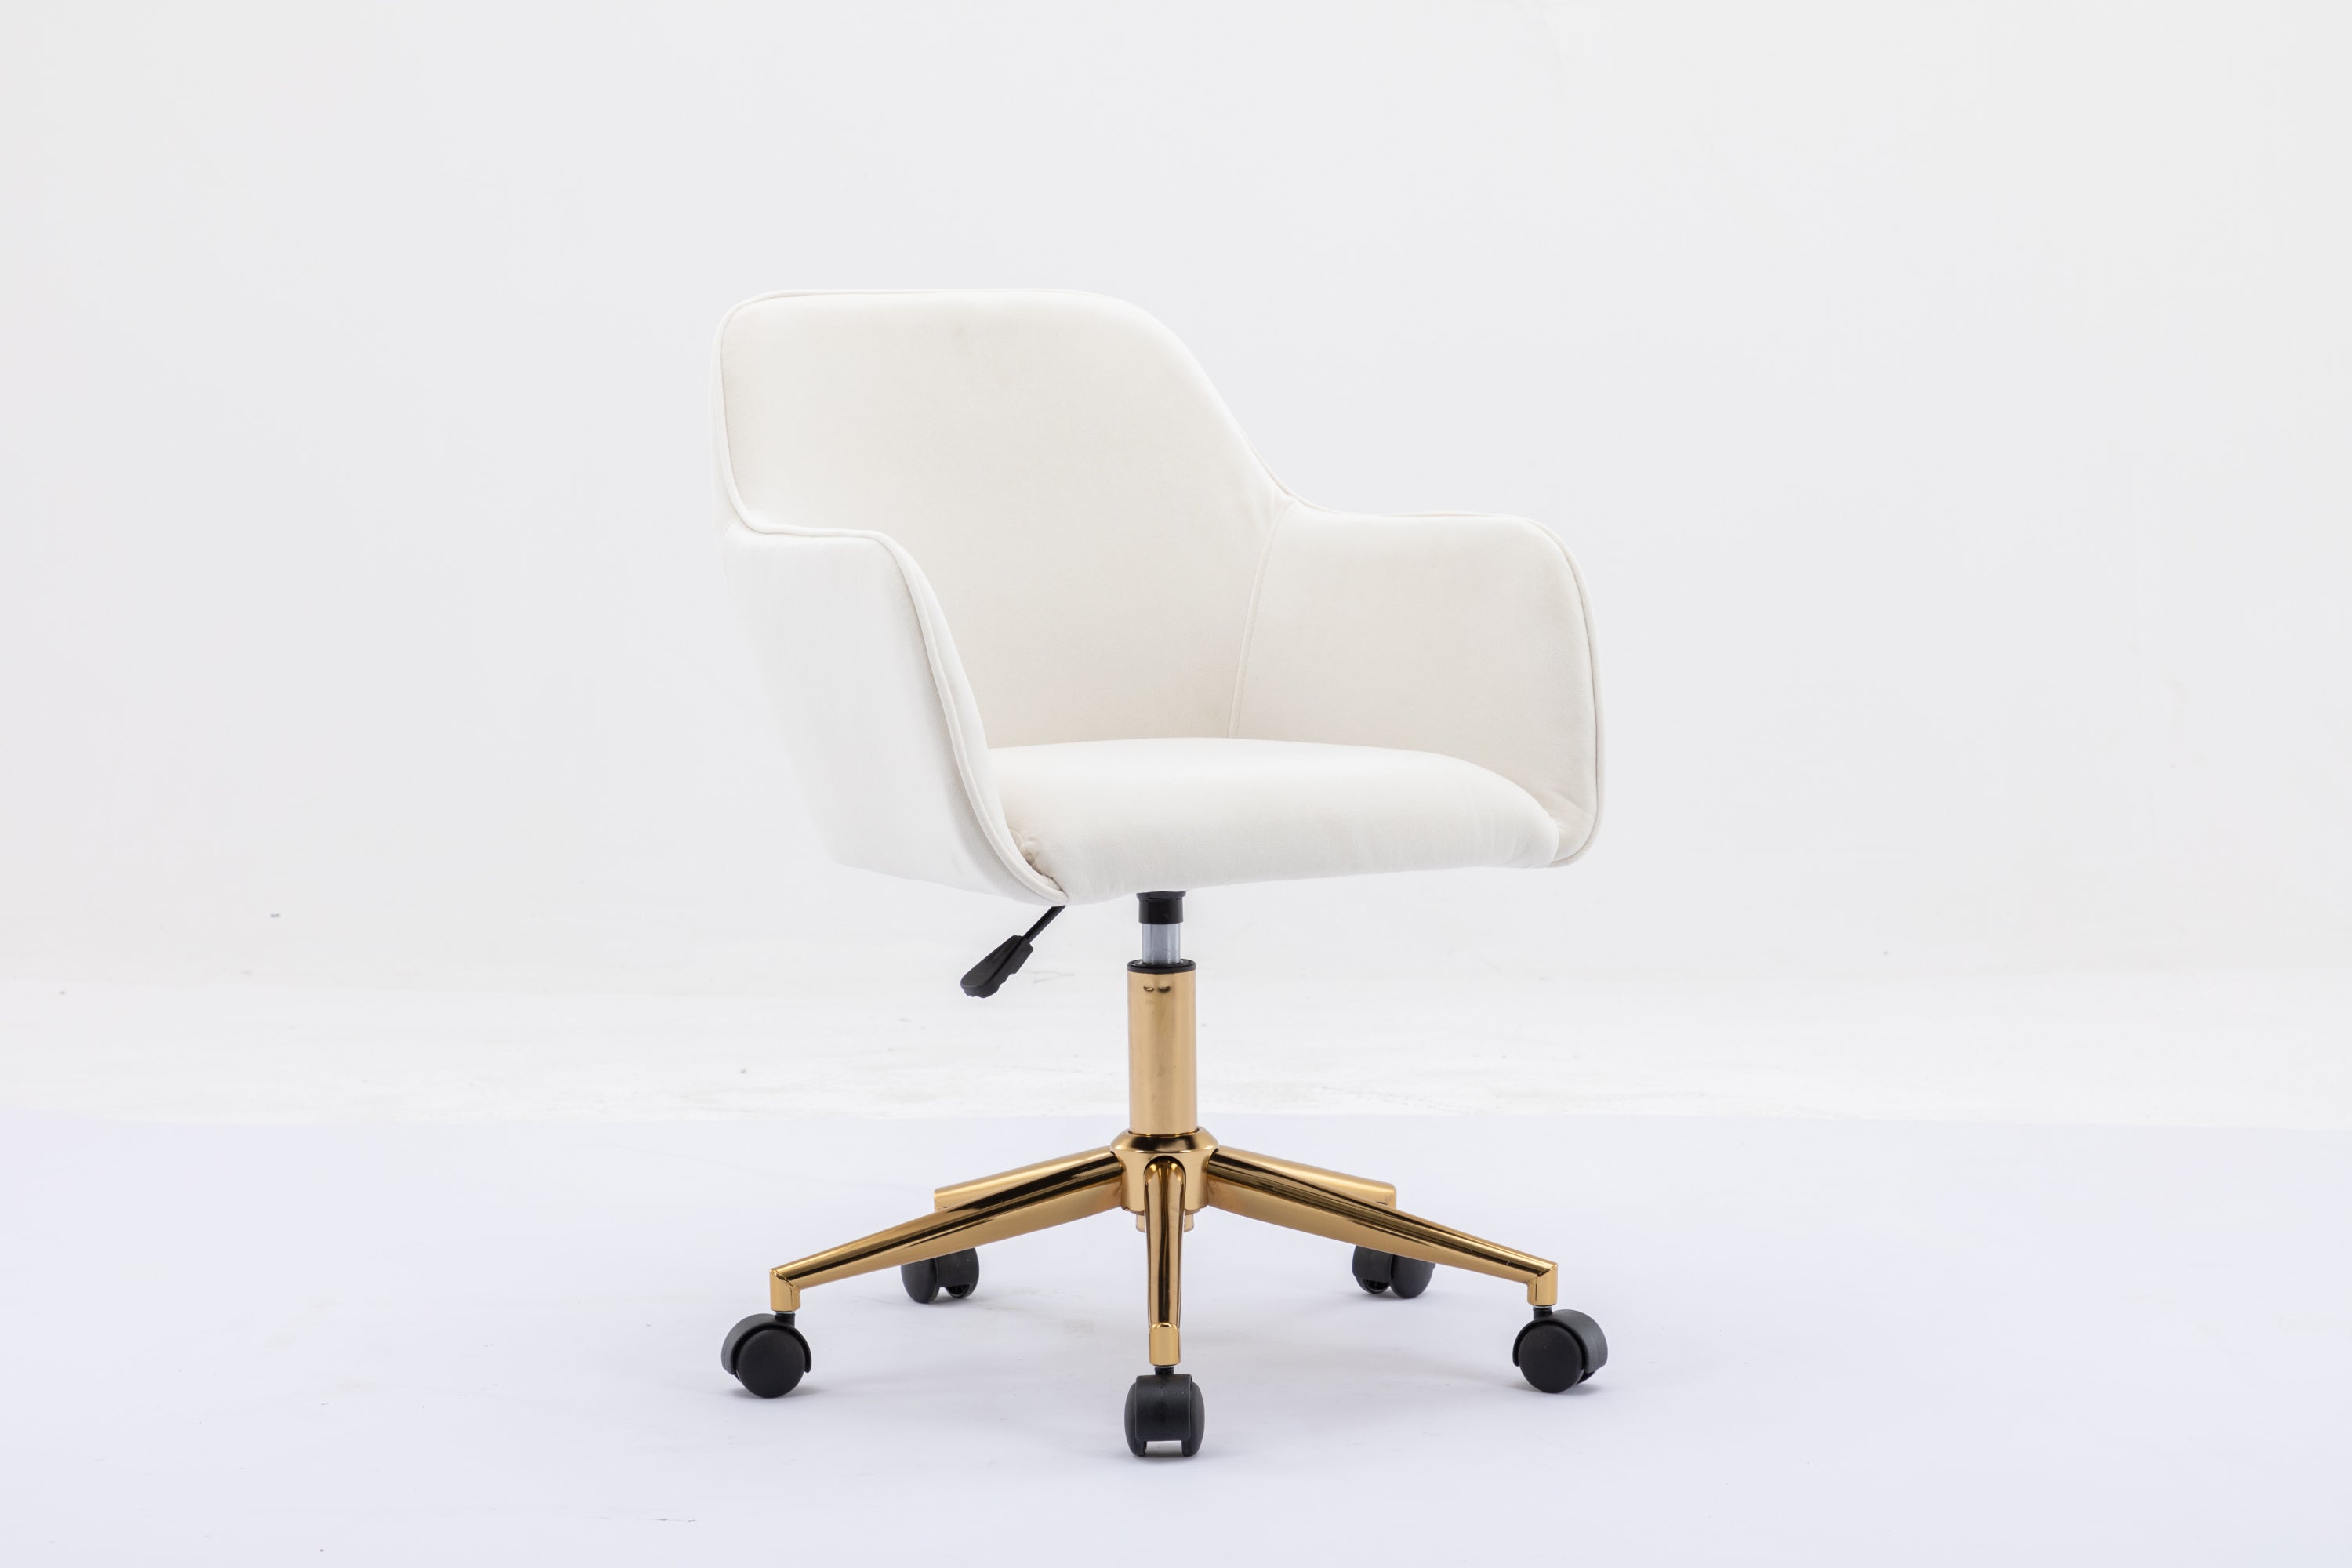 Modern Velvet Adjustable Height 360 revolving Home Office Chair with Gold Metal Legs - Ivory White